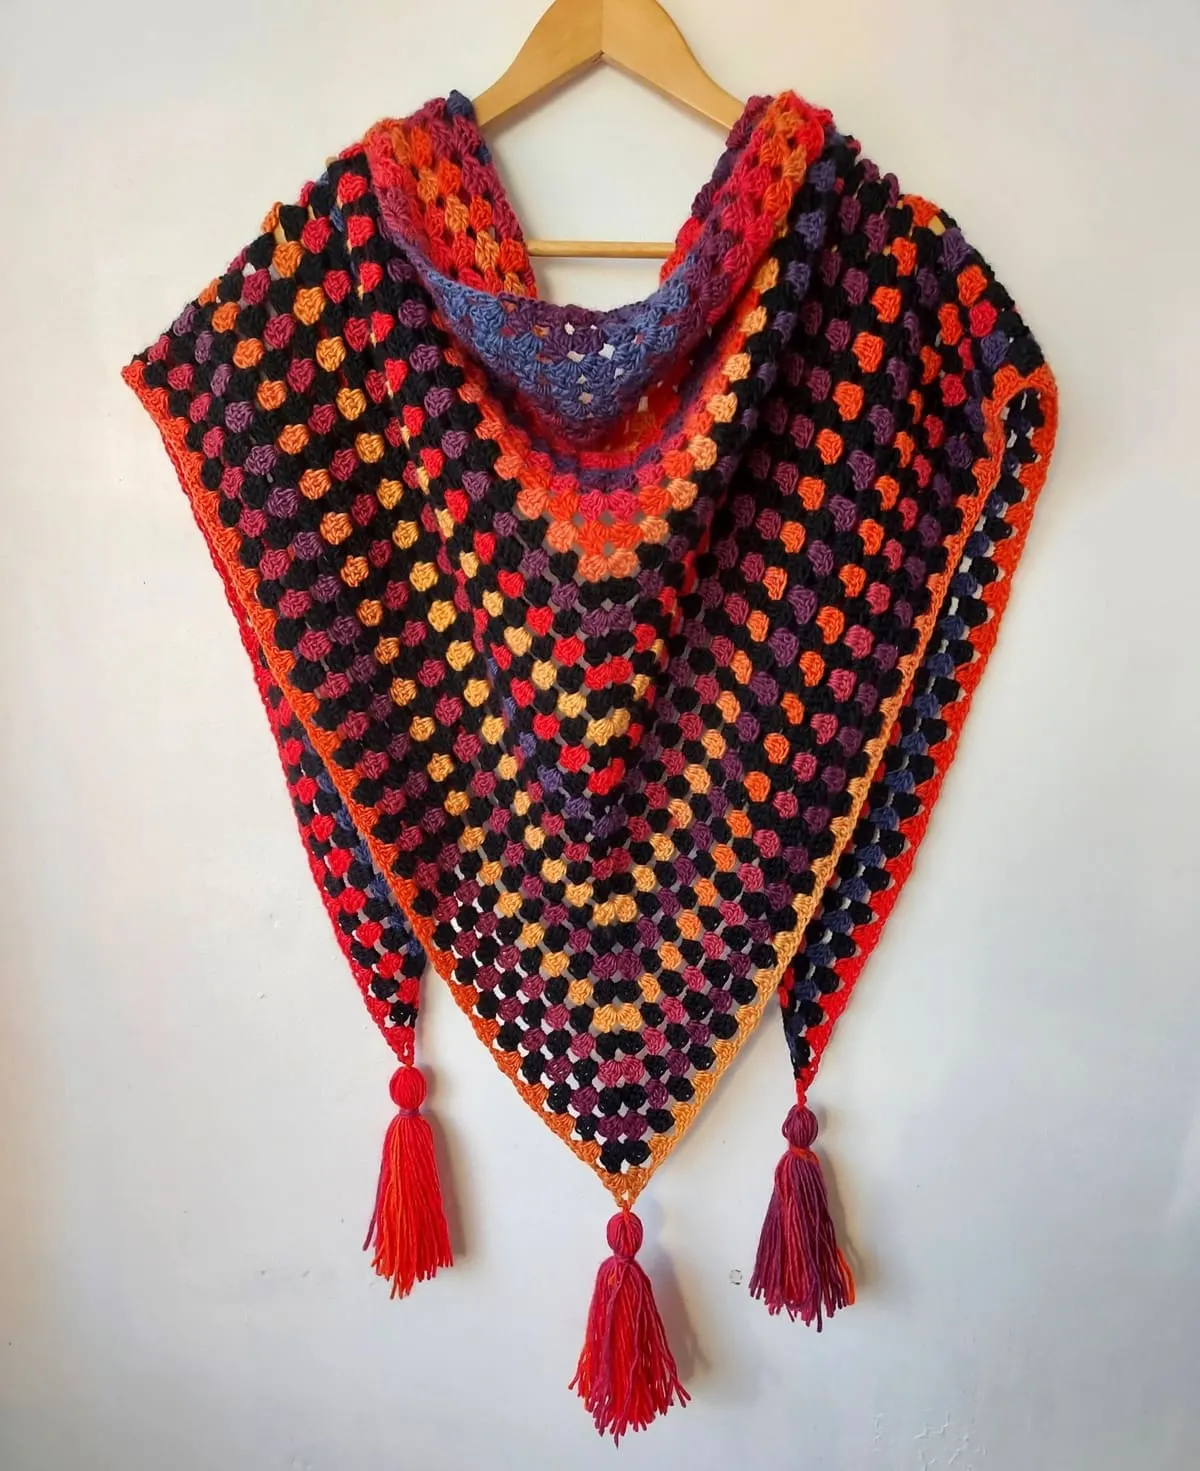 Granny stitch triangle shawl with tassels in bright orange, yellow and black colours.